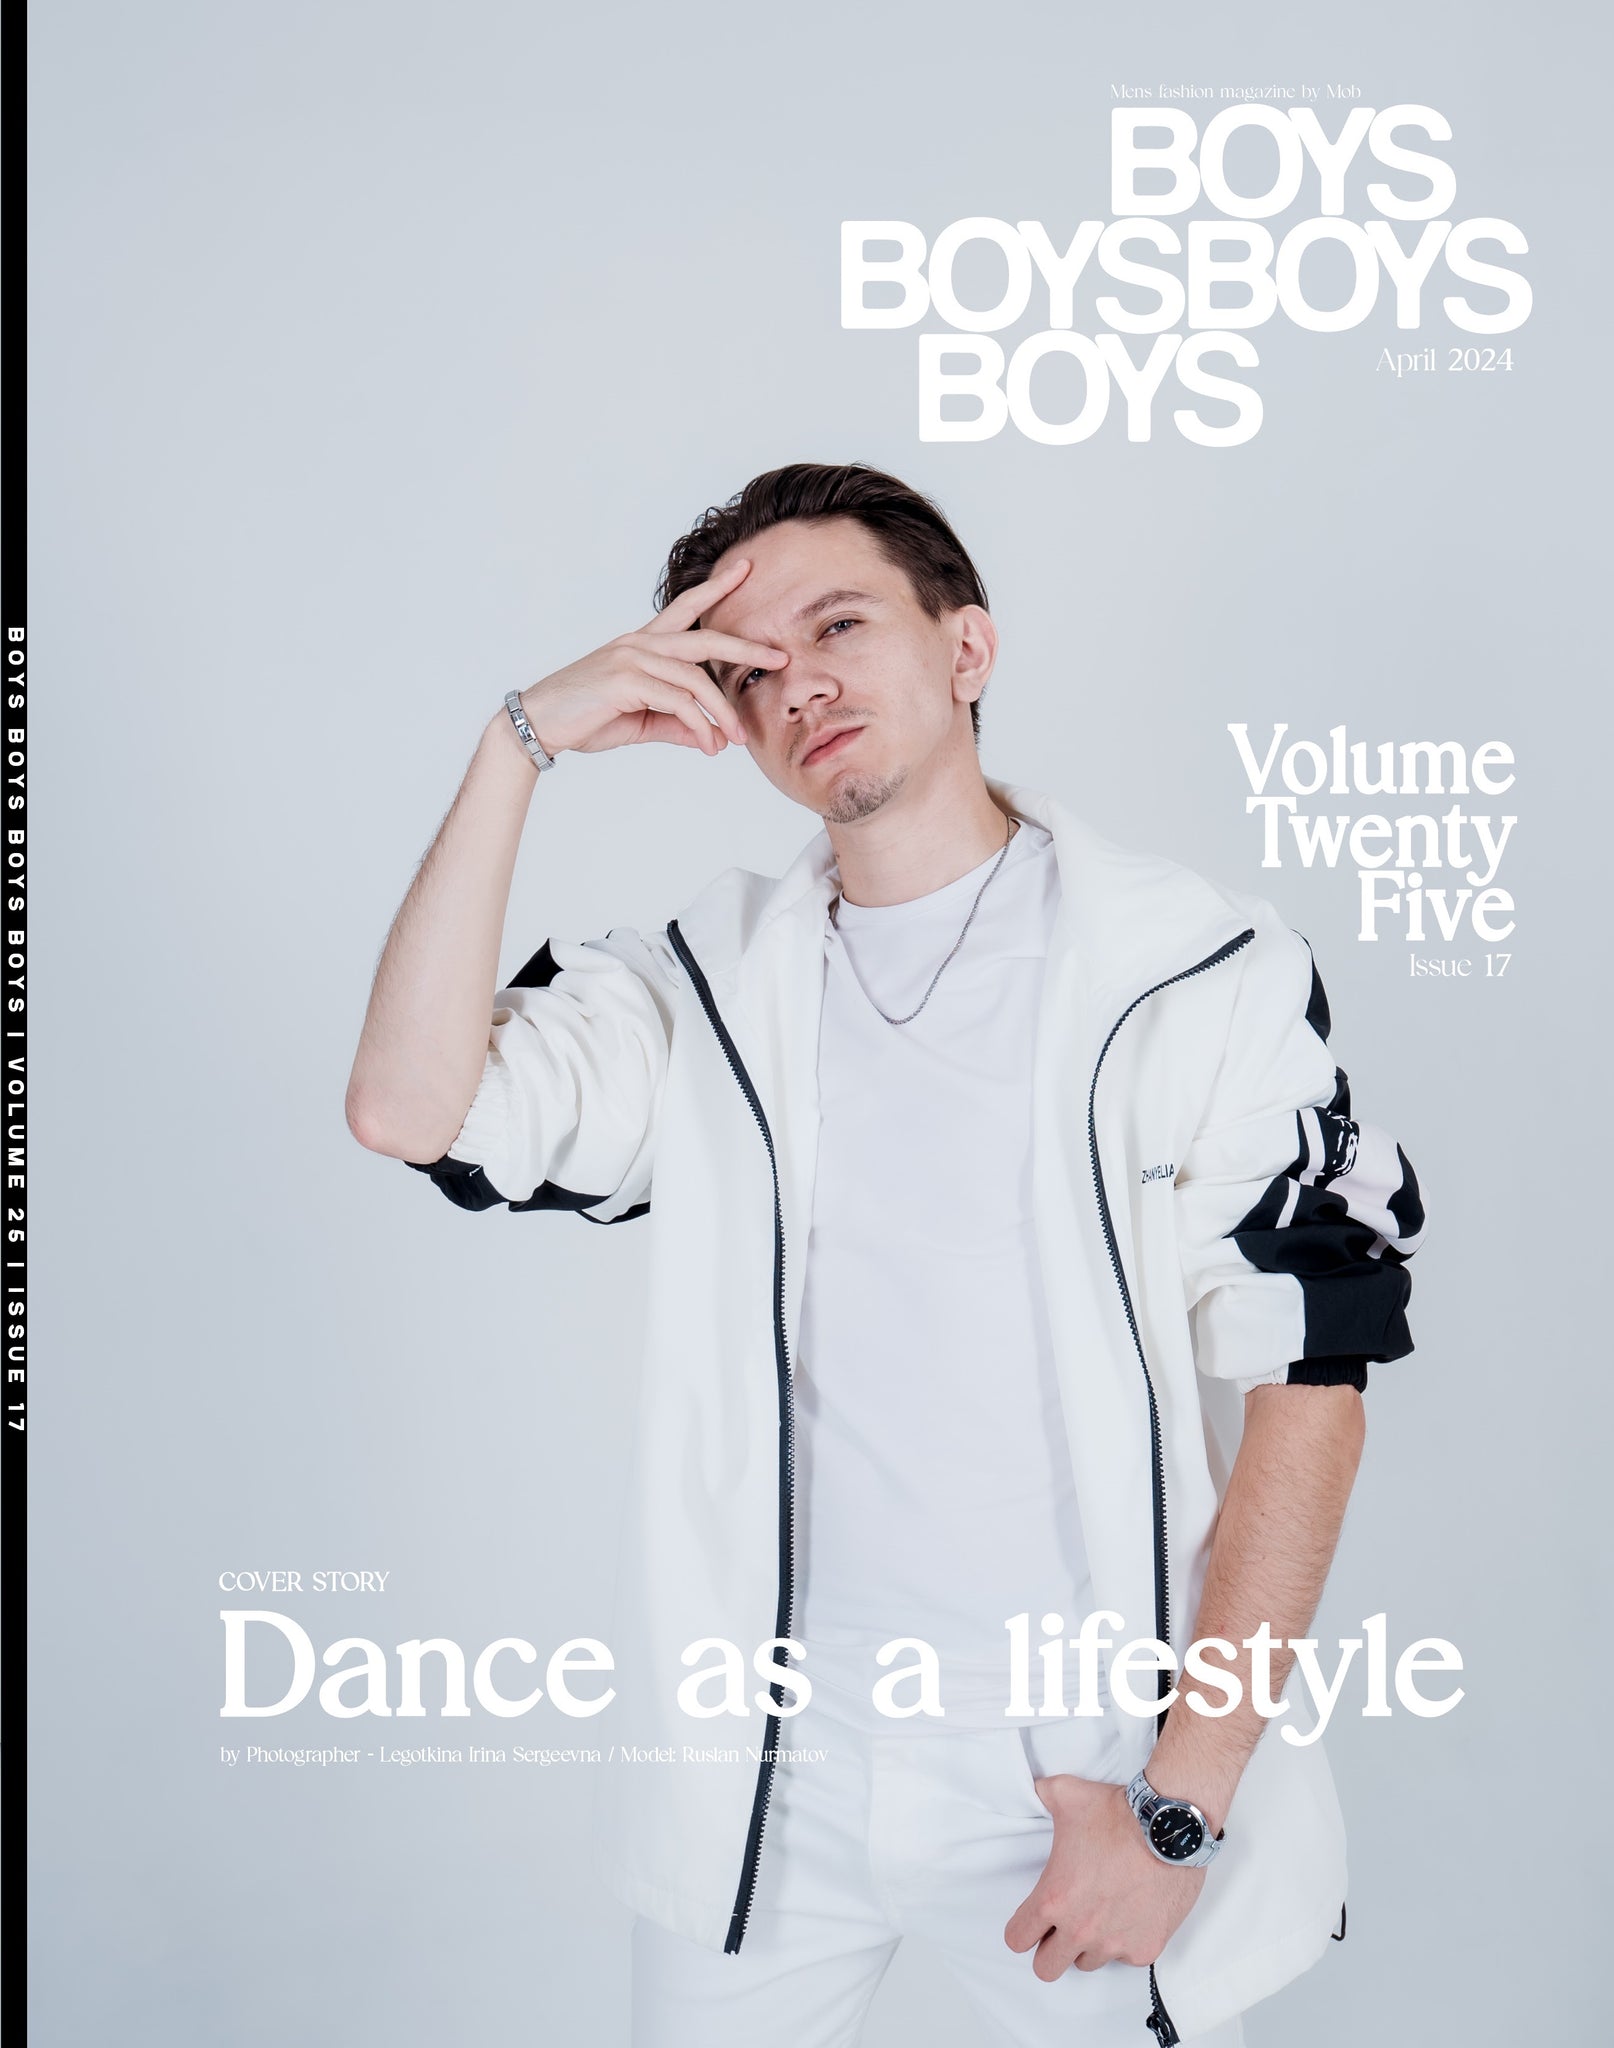 BOYS BOYS BOYS BOYS | VOLUME TWENTY FIVE | ISSUE #17